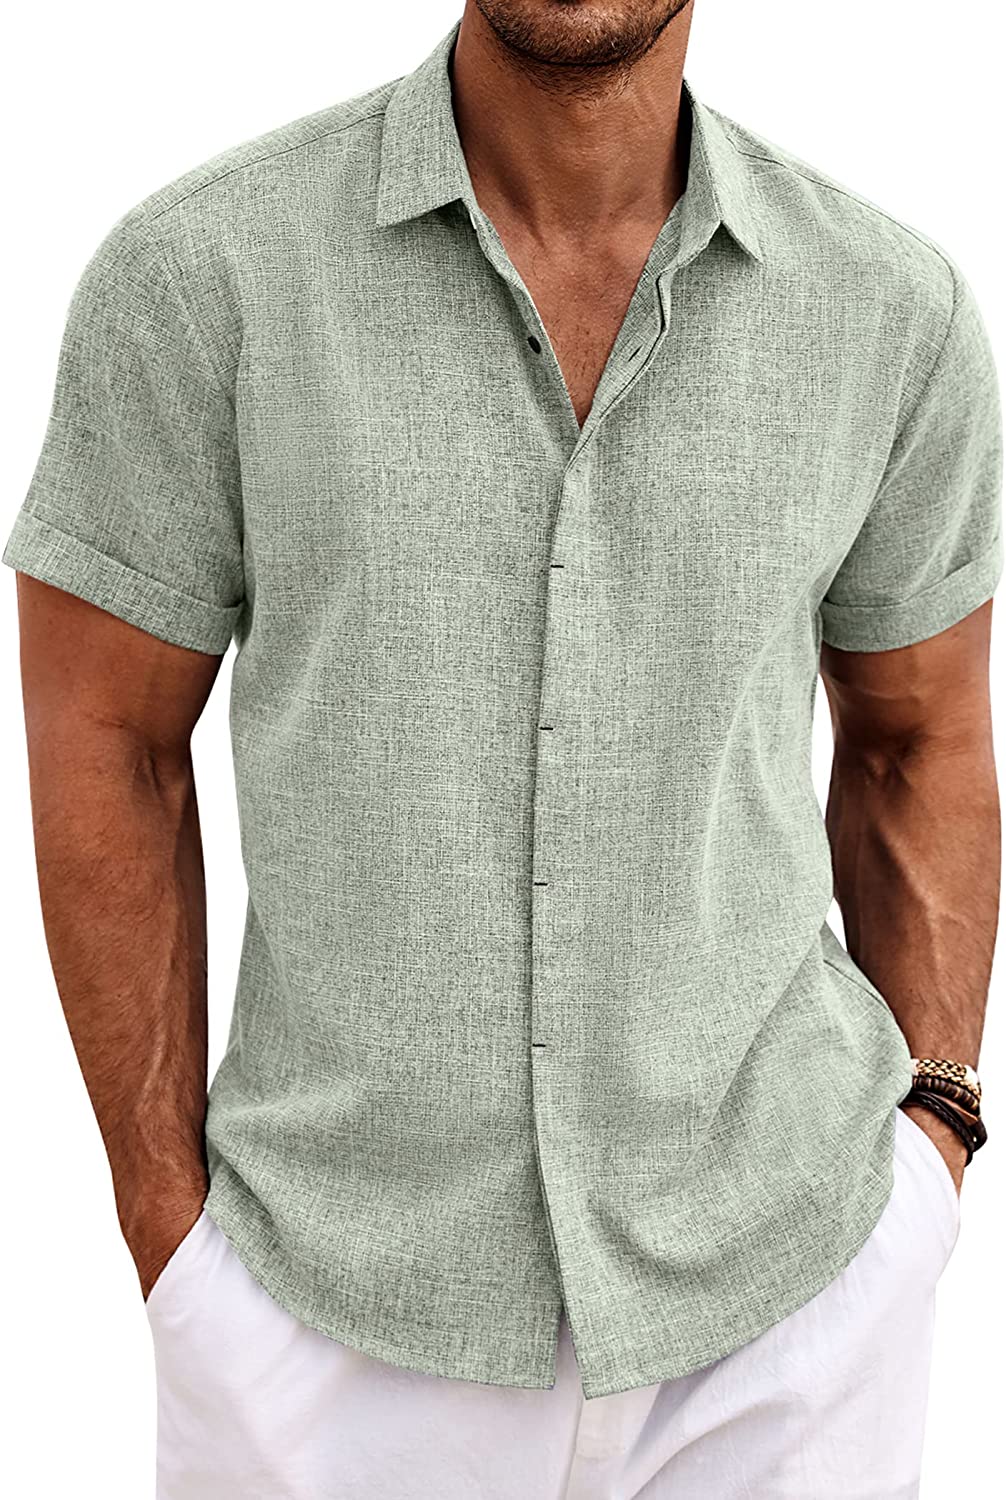 COOFANDY Men's Linen Shirts Short Sleeve Casual Shirts Button Down